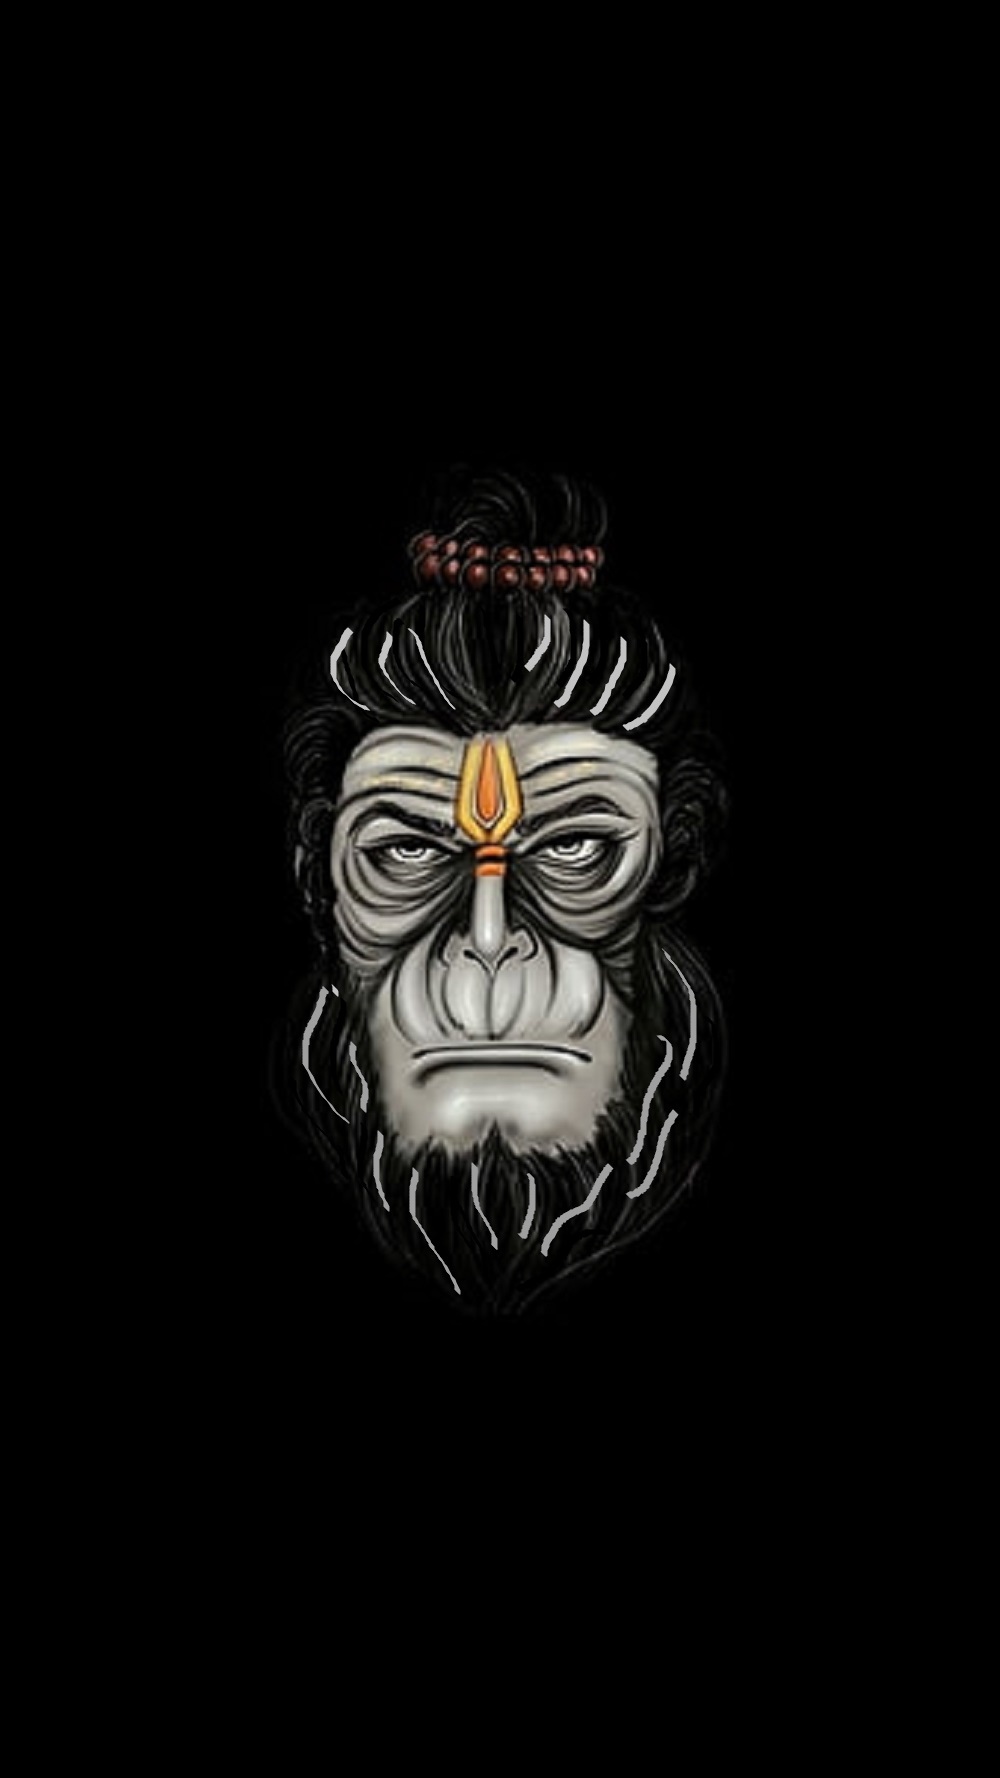 Hanuman Ji Photo Hd - angry face